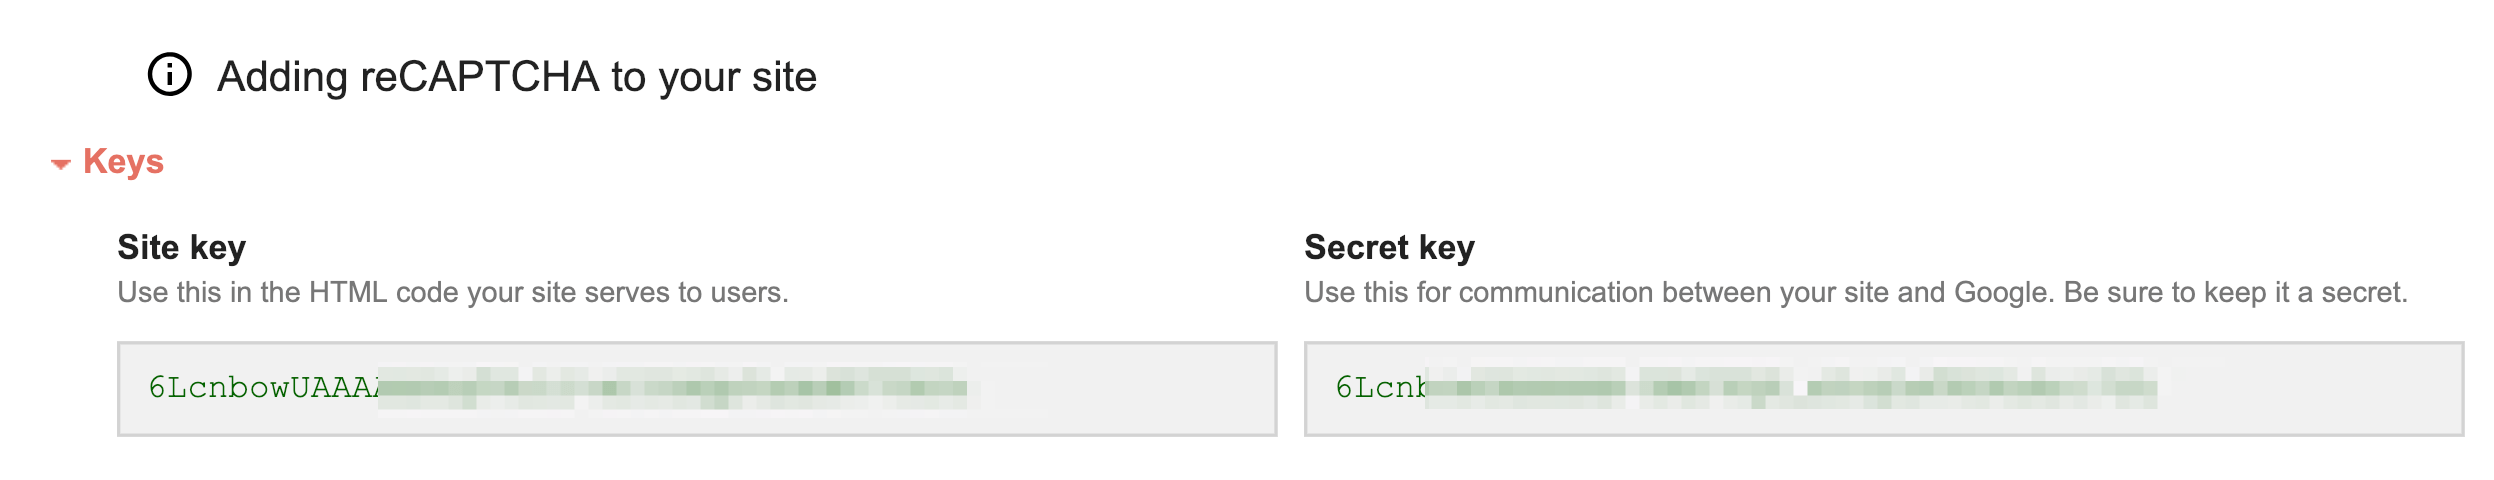 Screenshot of the Google API Site and Secret key boxes